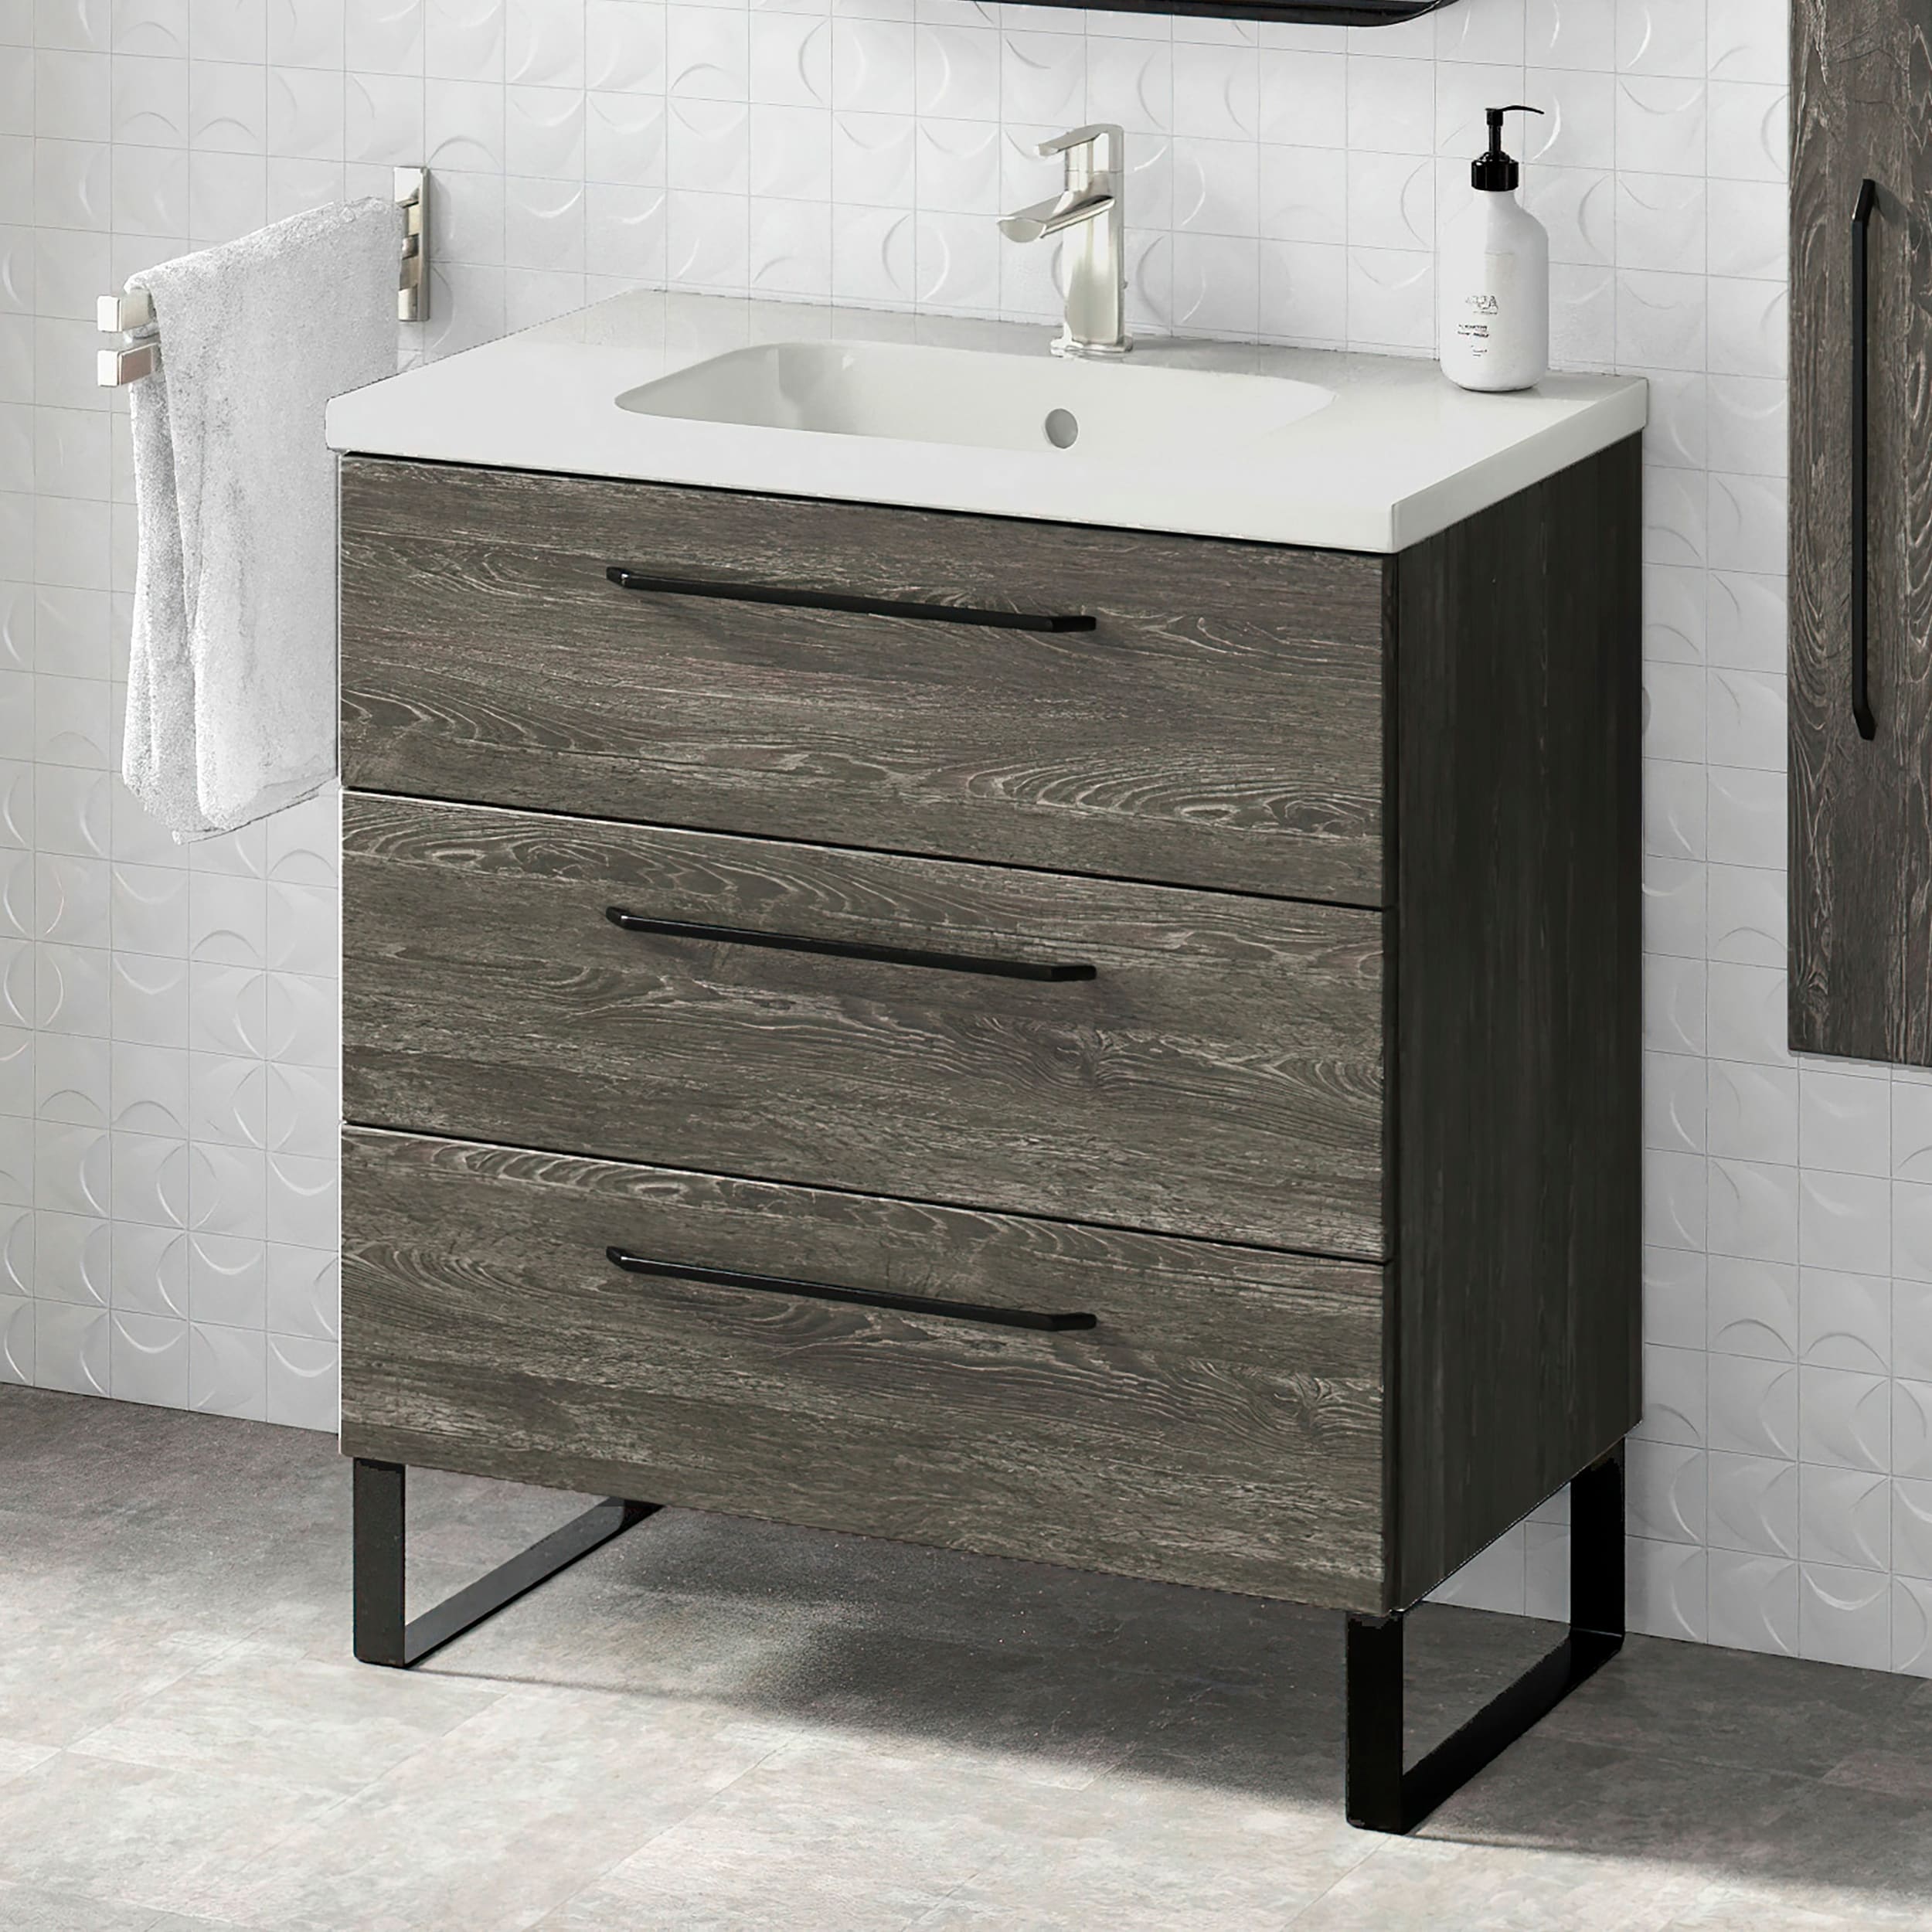 32 Bathroom Vanity Cabinet Ceramic Sink Set Denver W 32 Xh